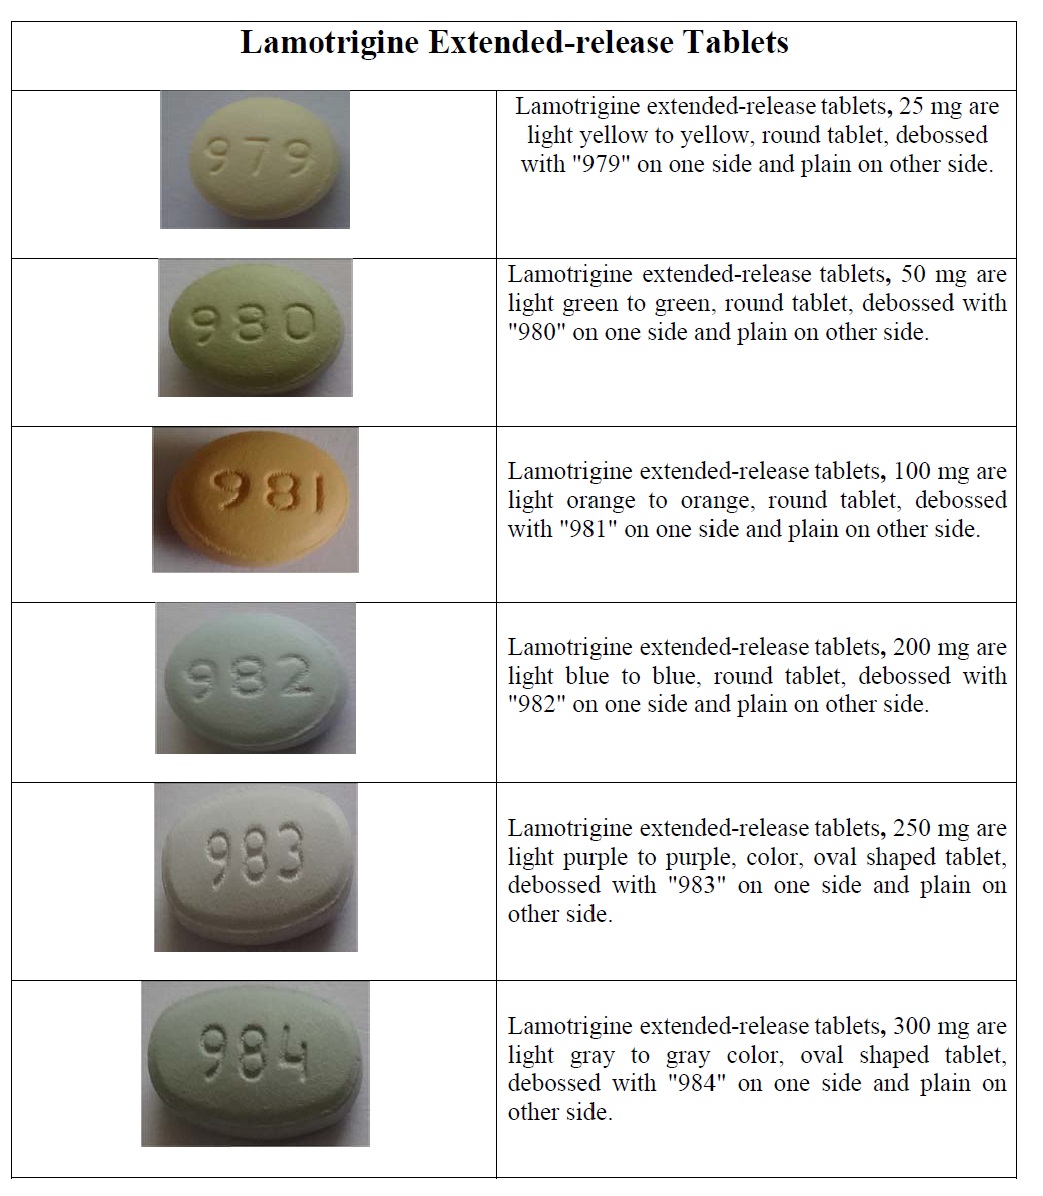 Lamotrigine Extended-release Tablets